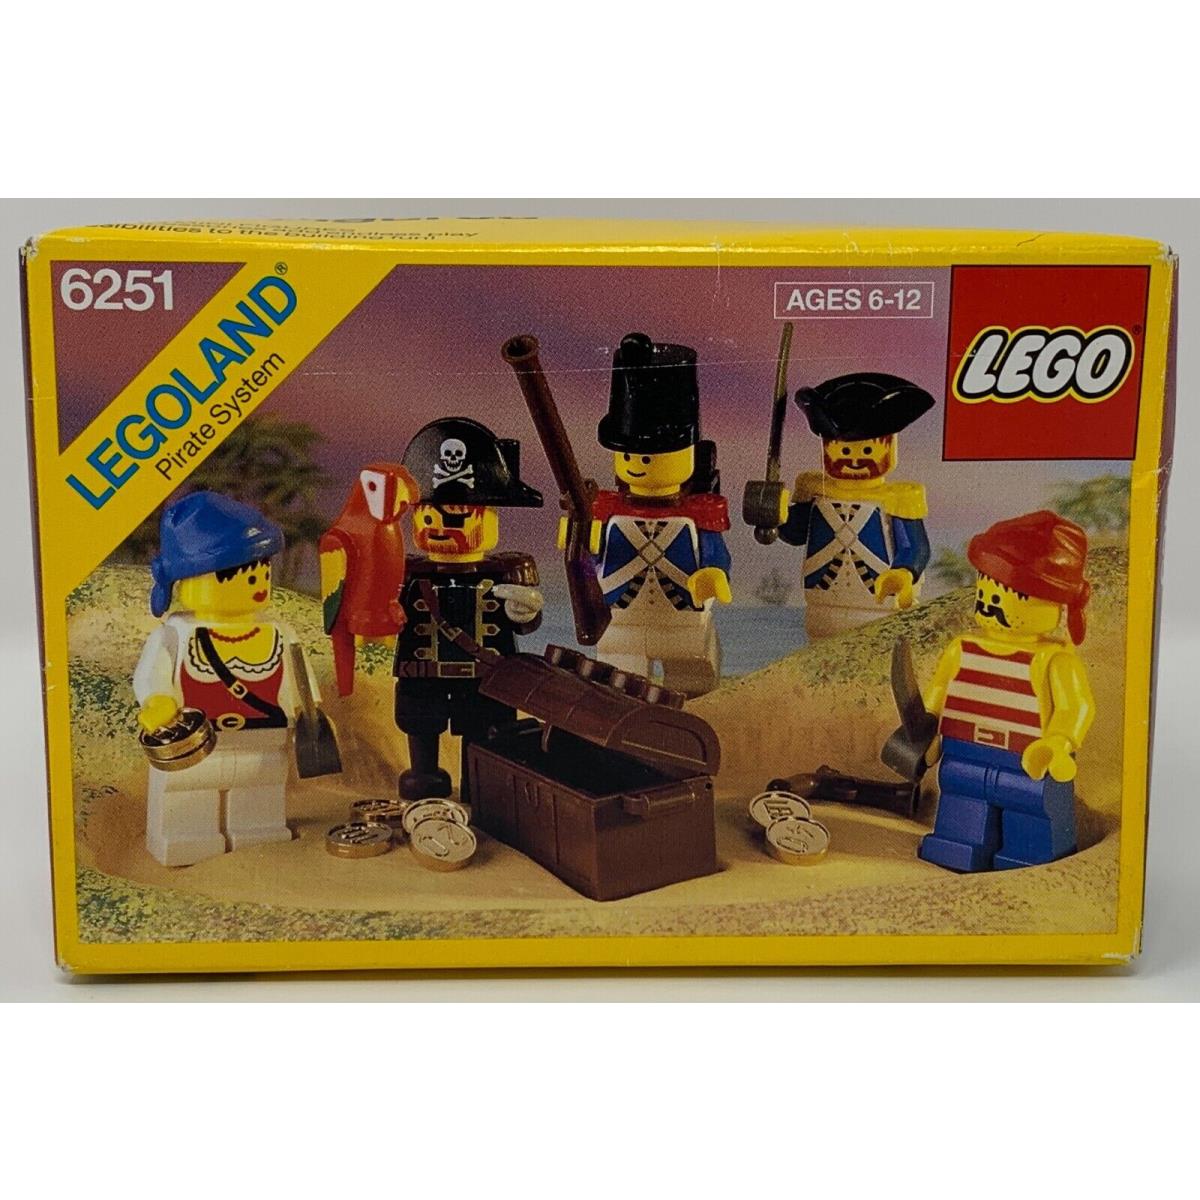 Lego 6251 Pirate Minifigures 1989